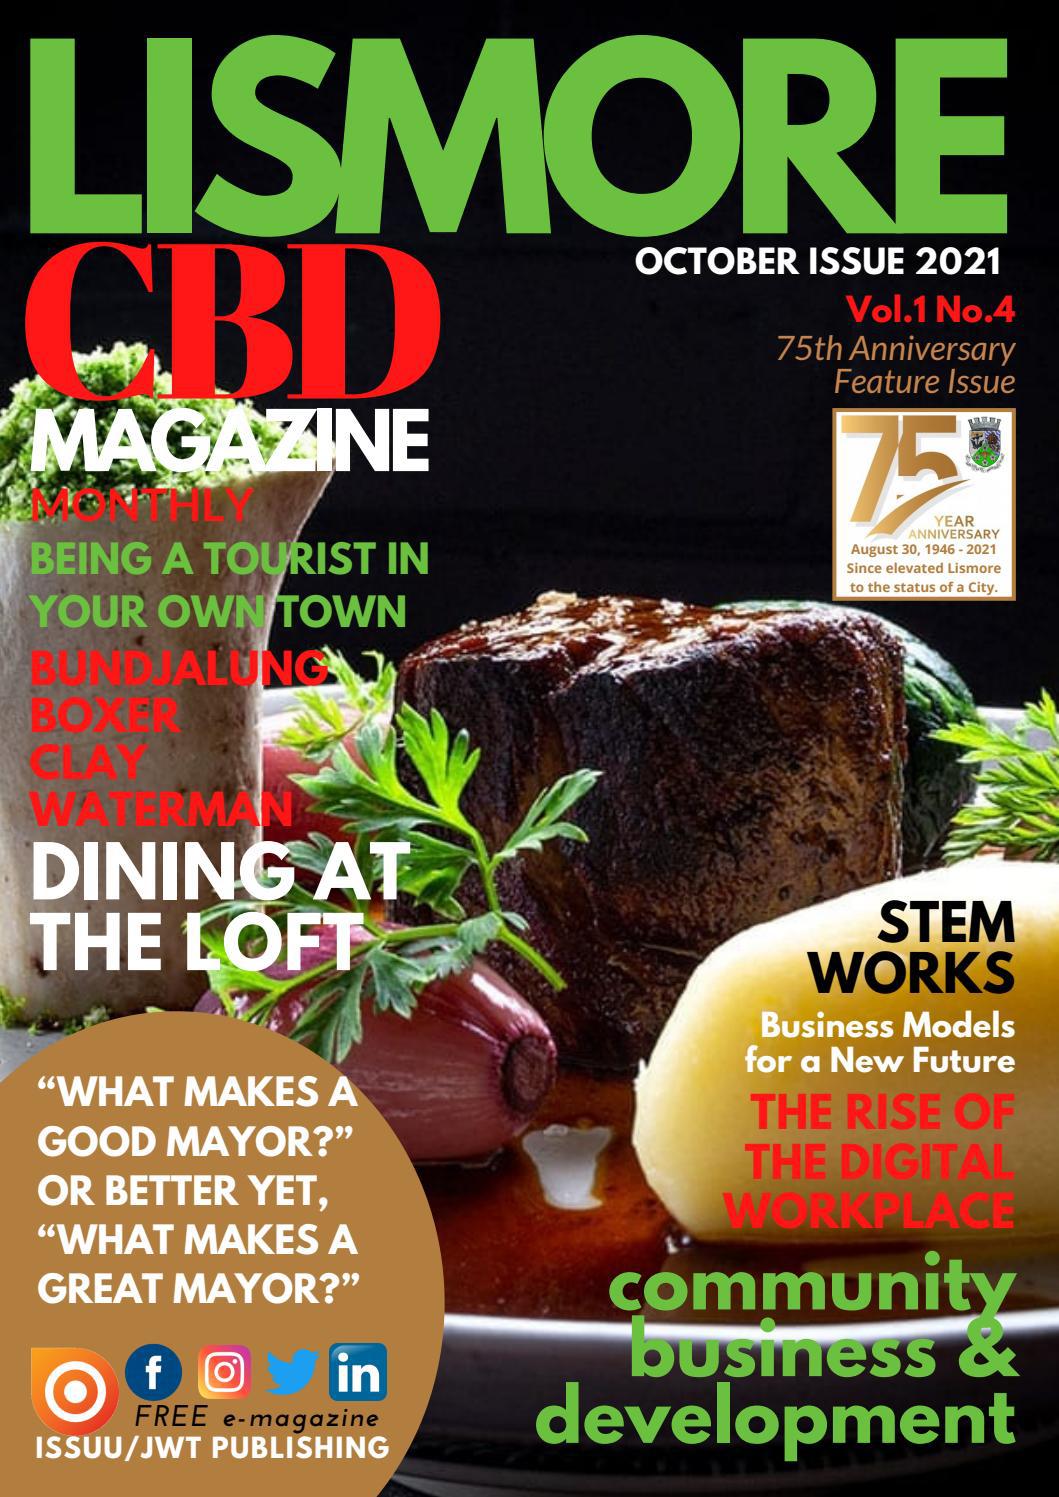 Lismore CBD Magazine - OCTOBER 2021 | Vol 1. No. 4